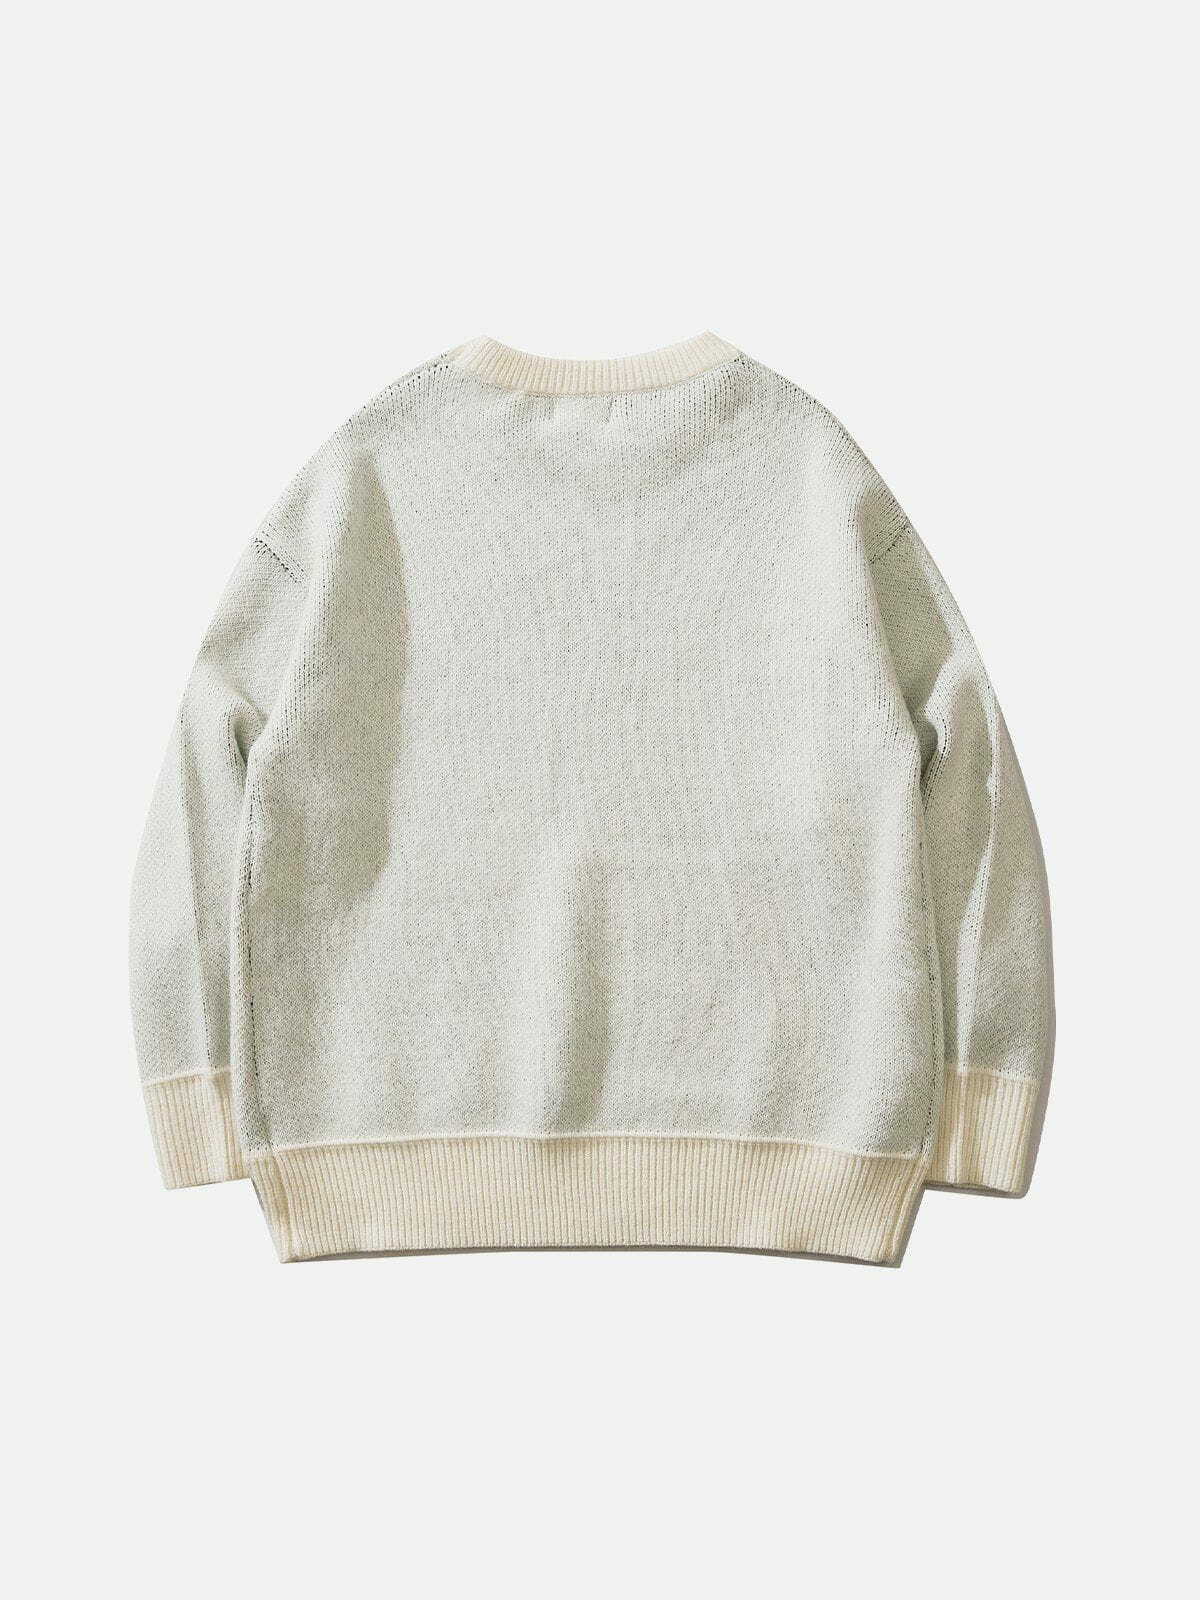 doberman print sweater edgy streetwear statement 4953